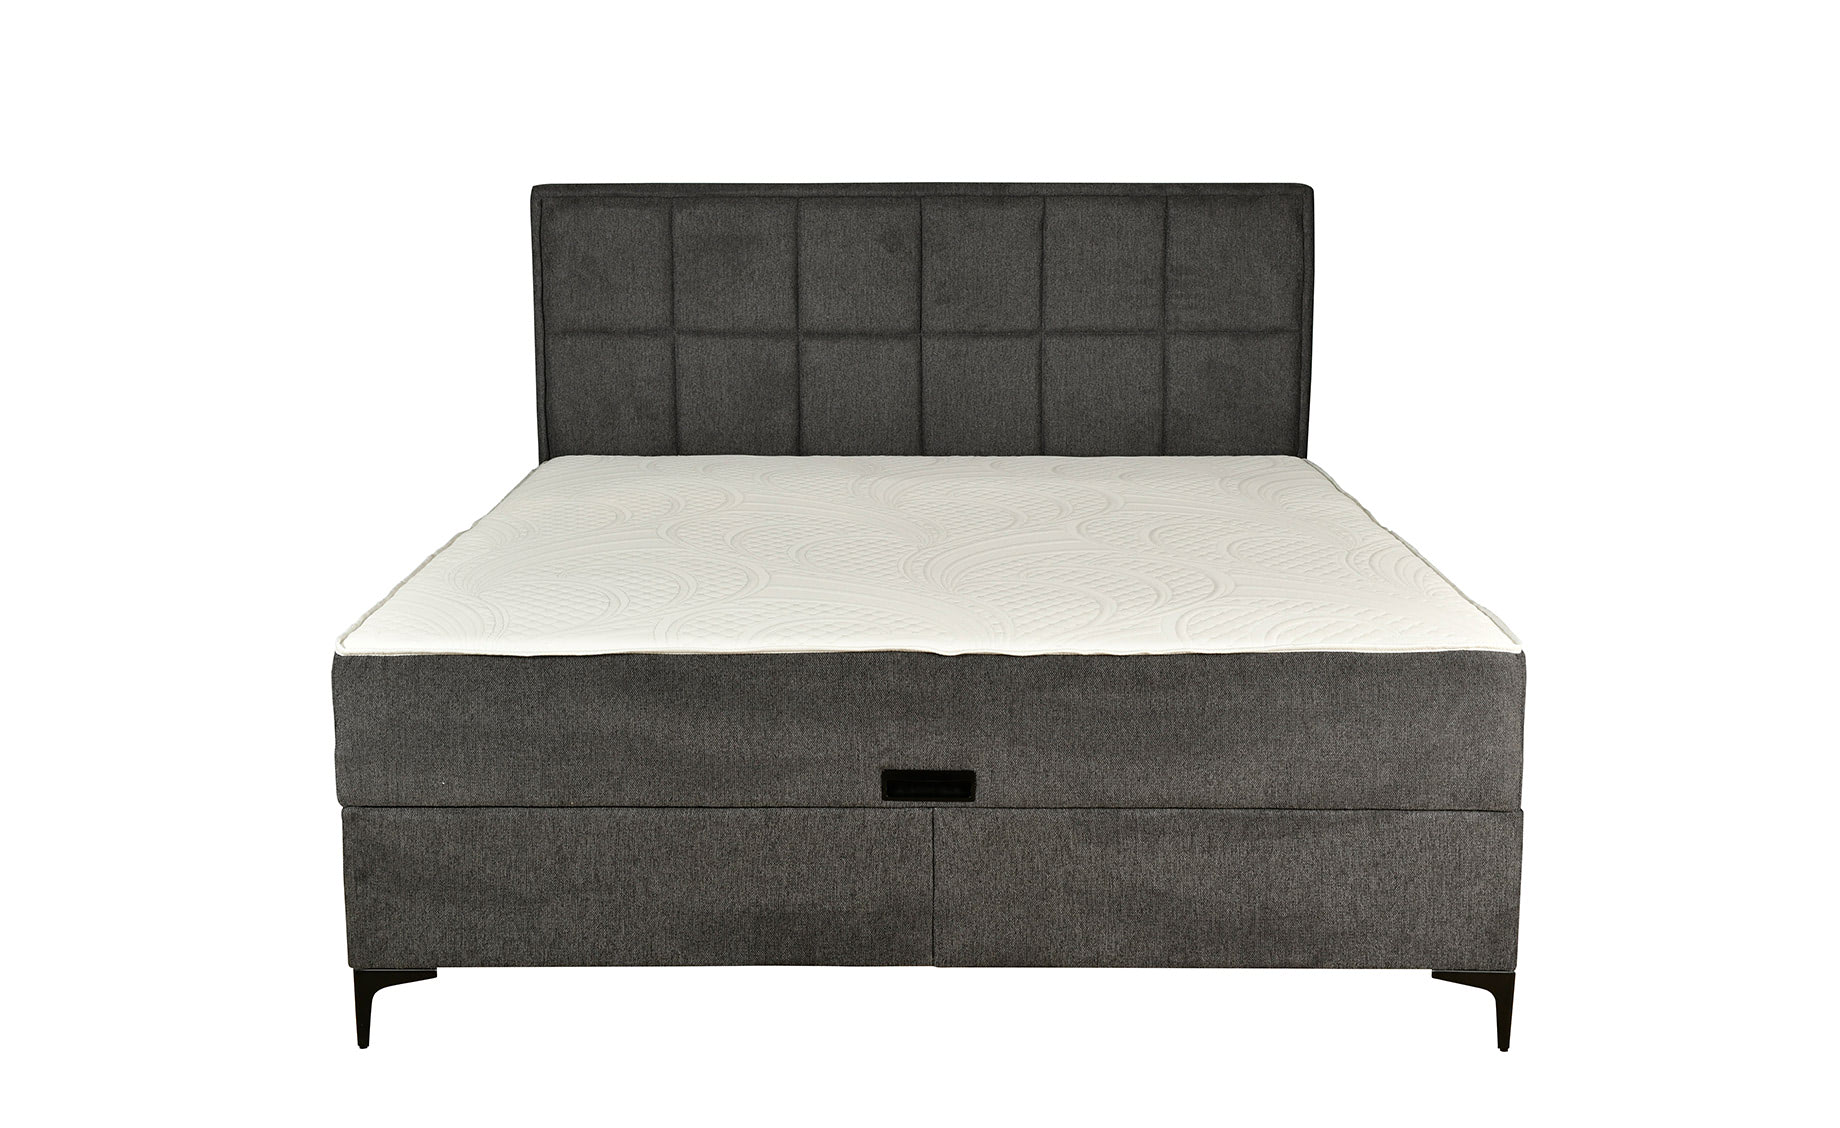 Boston krevet sa prostorom za odlaganje 184,5x209x130cm